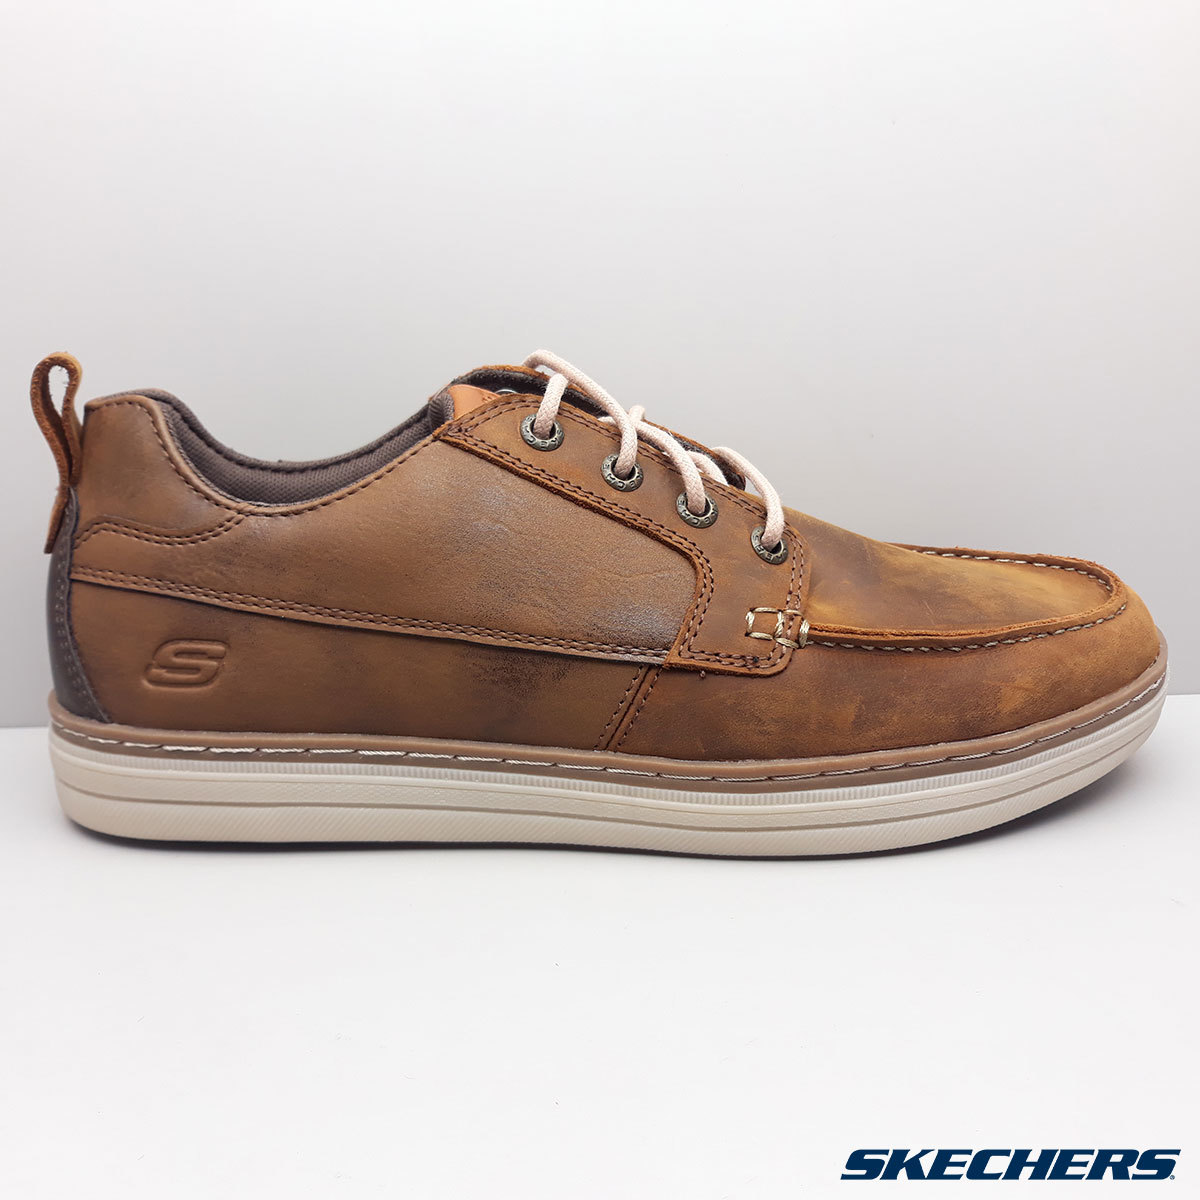 skechers govulc 2 men's leather shoes